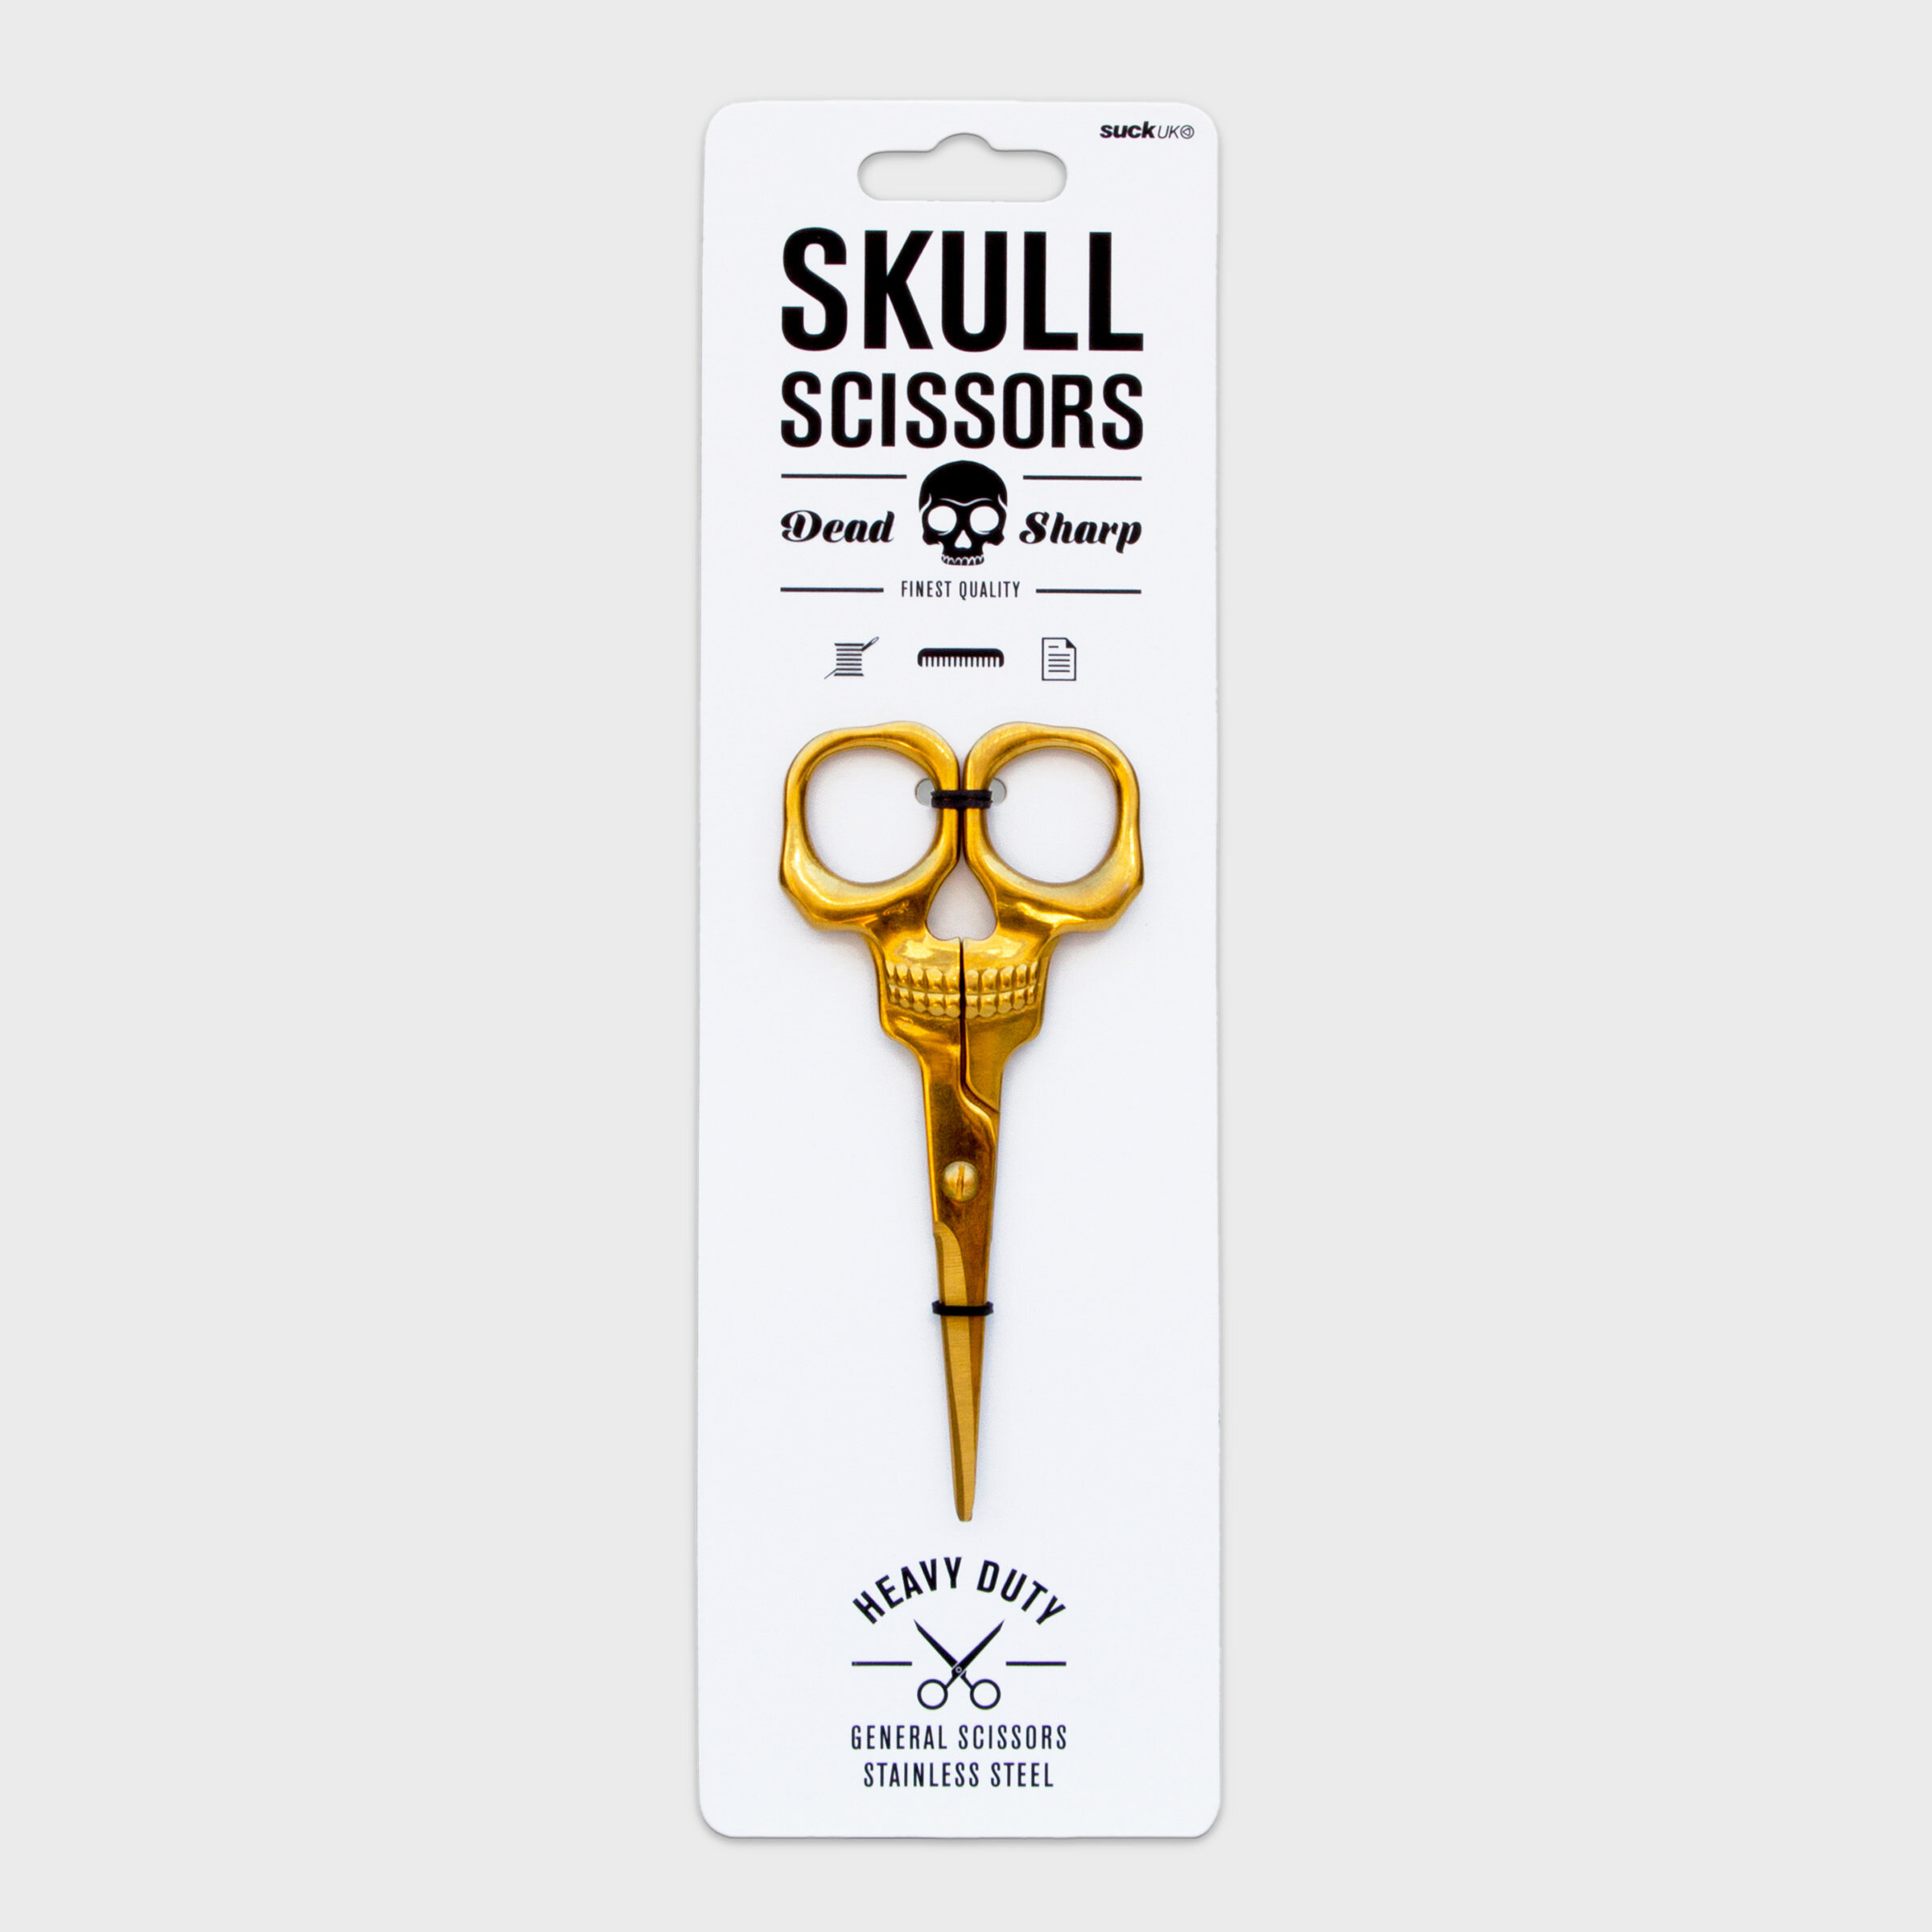 Cool Scissor Packaging